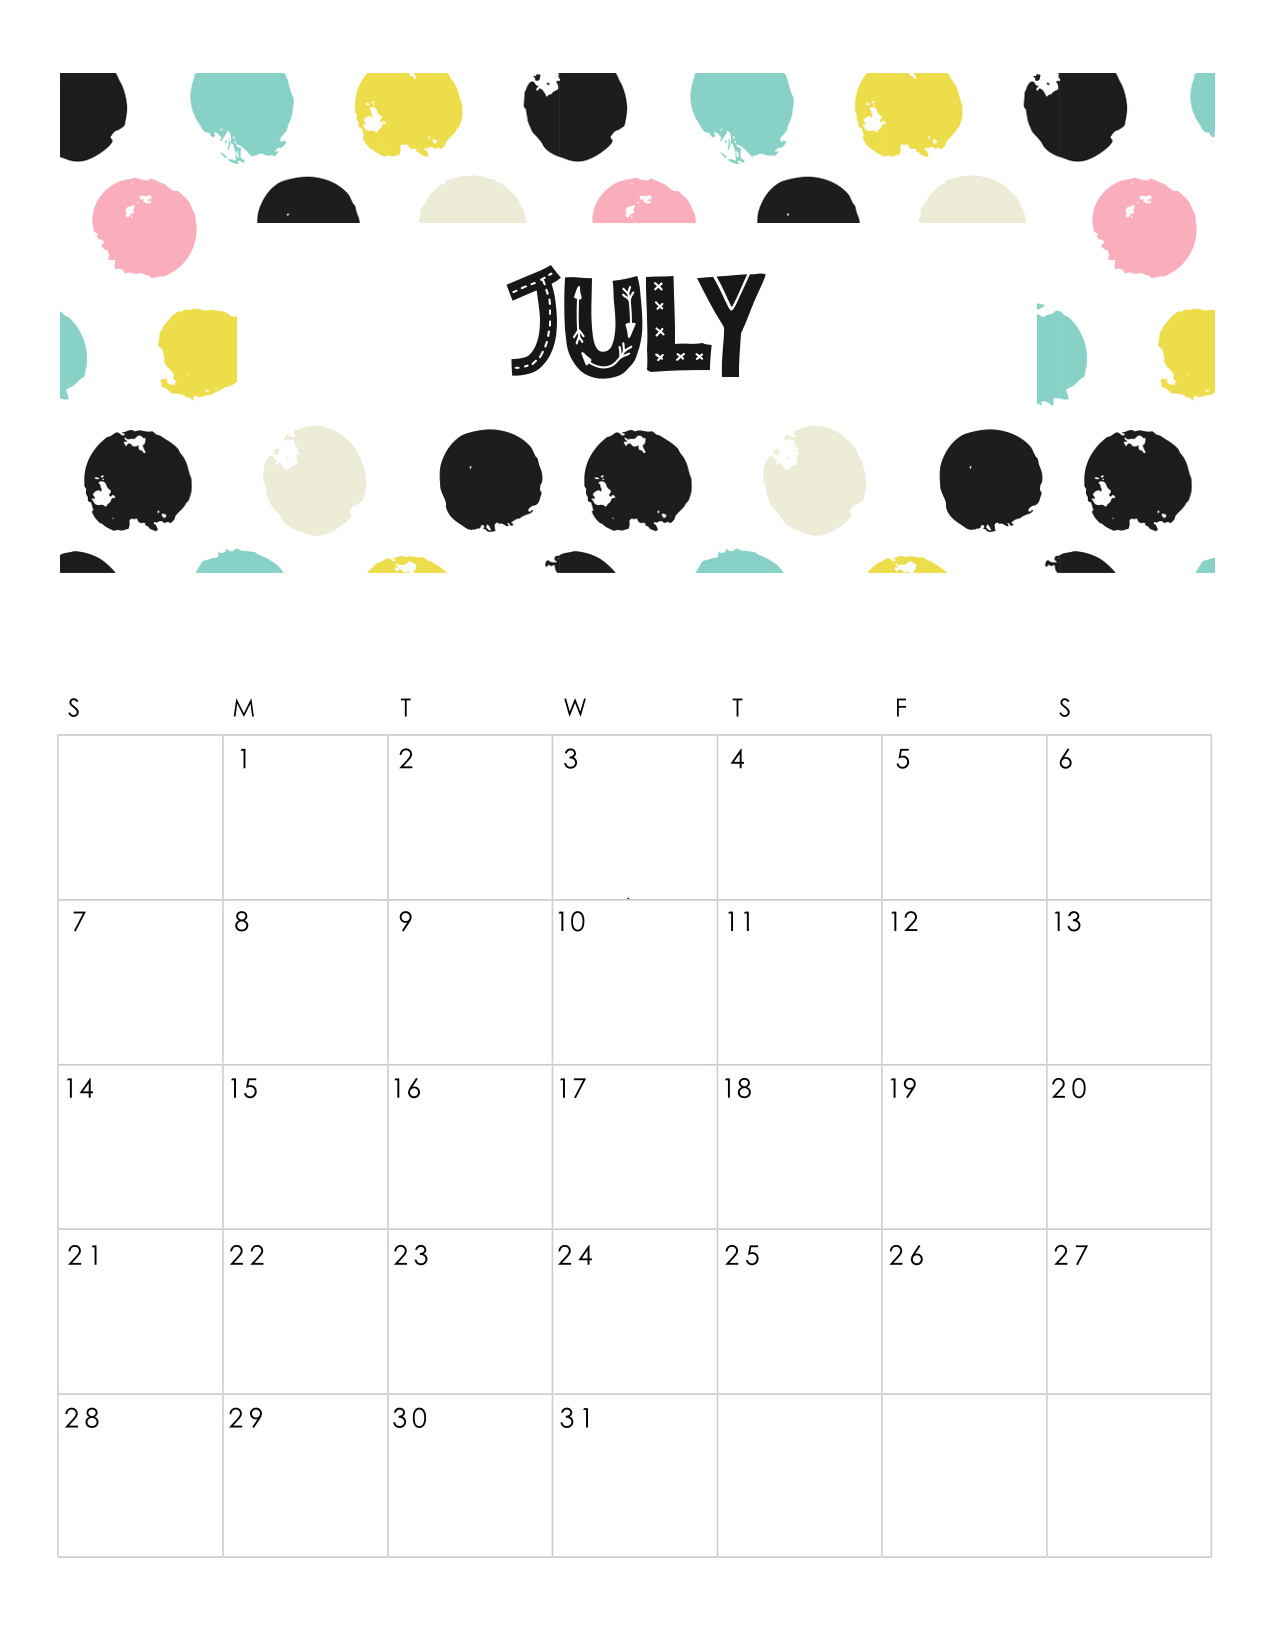 free-printable-abstract-patterned-calendar-2019-july.jpg